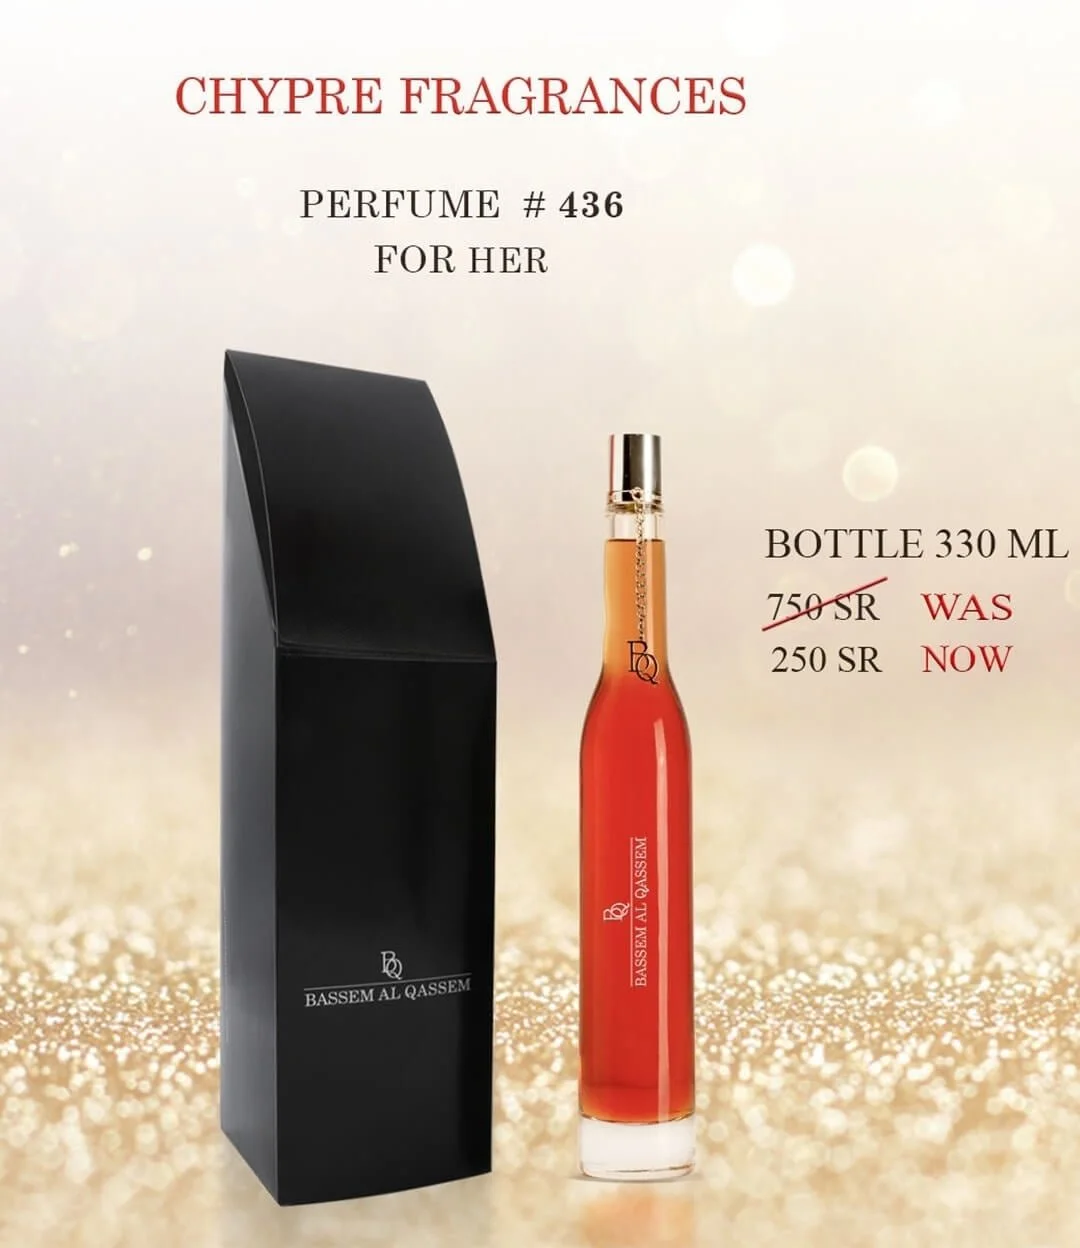 Perfume #436 Chypre Fragrance for Her by Bassem Al Qassem 